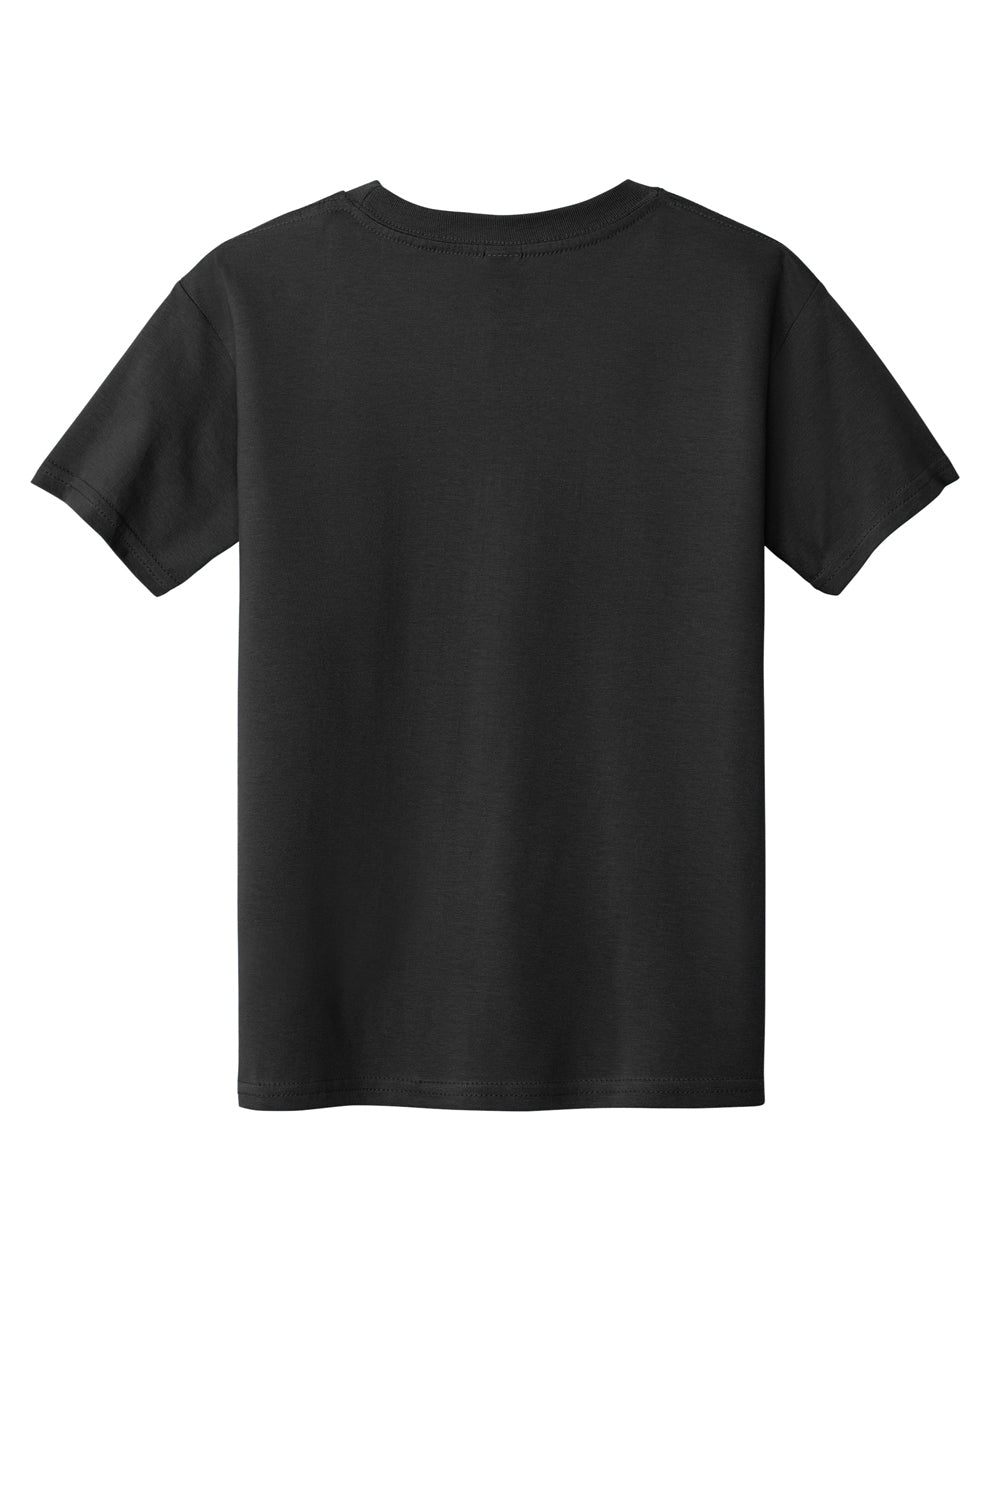 Gildan Youth Softstyle Short Sleeve Crewneck T-Shirt Black Flat Back